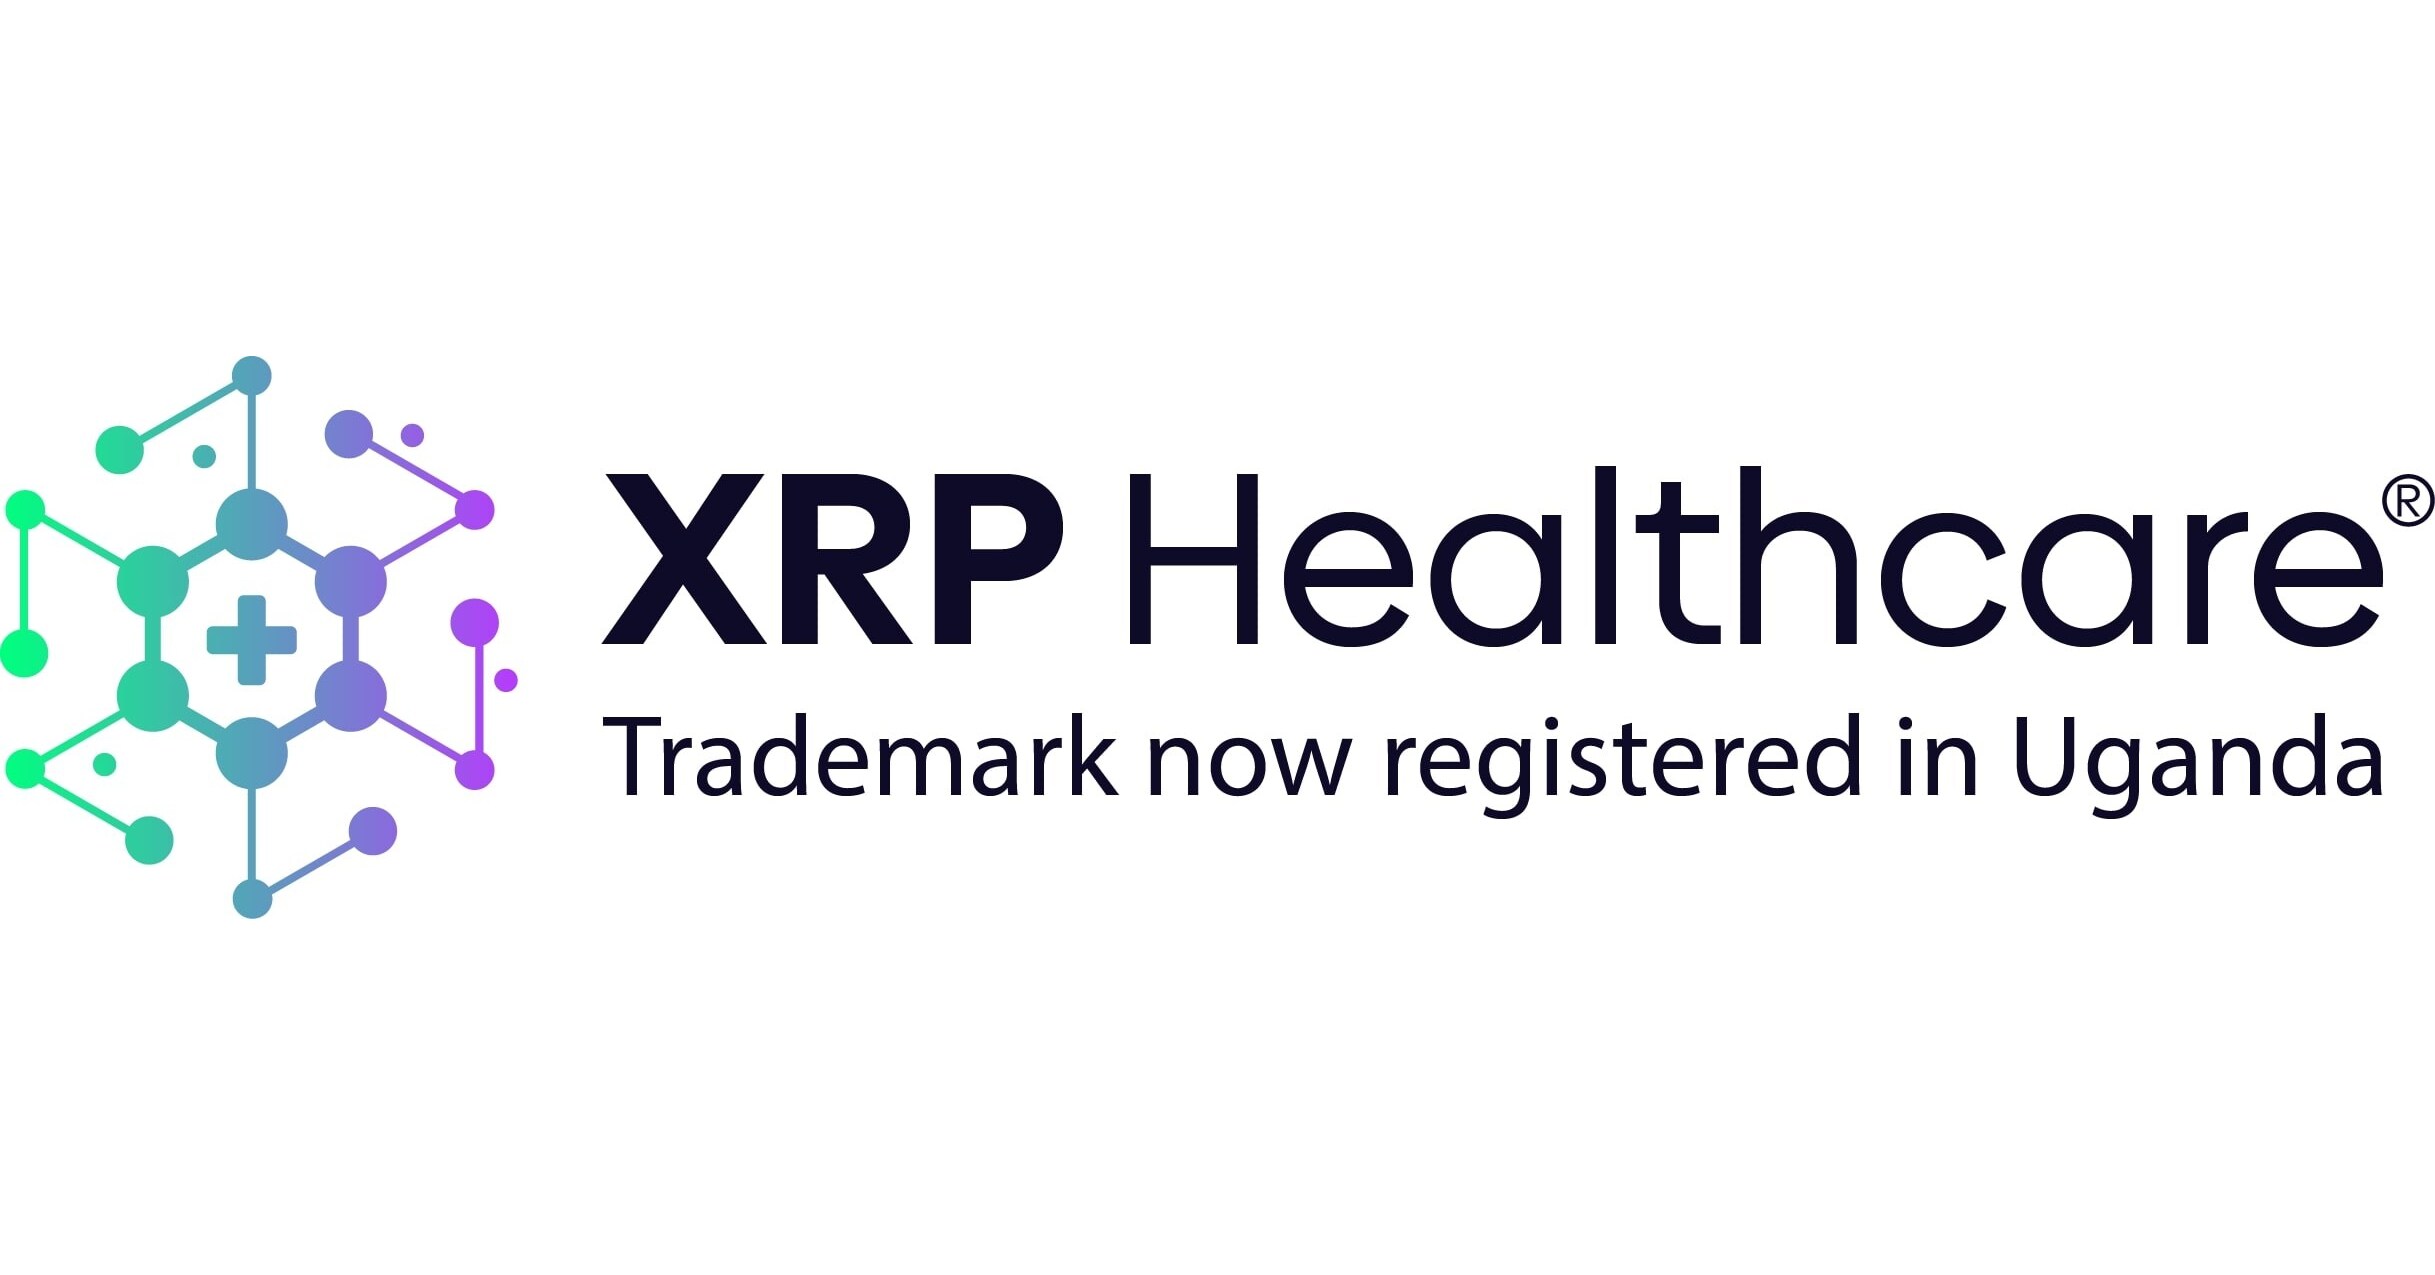 XRP Healthcare凭借商标注册成功在乌干达站稳脚跟